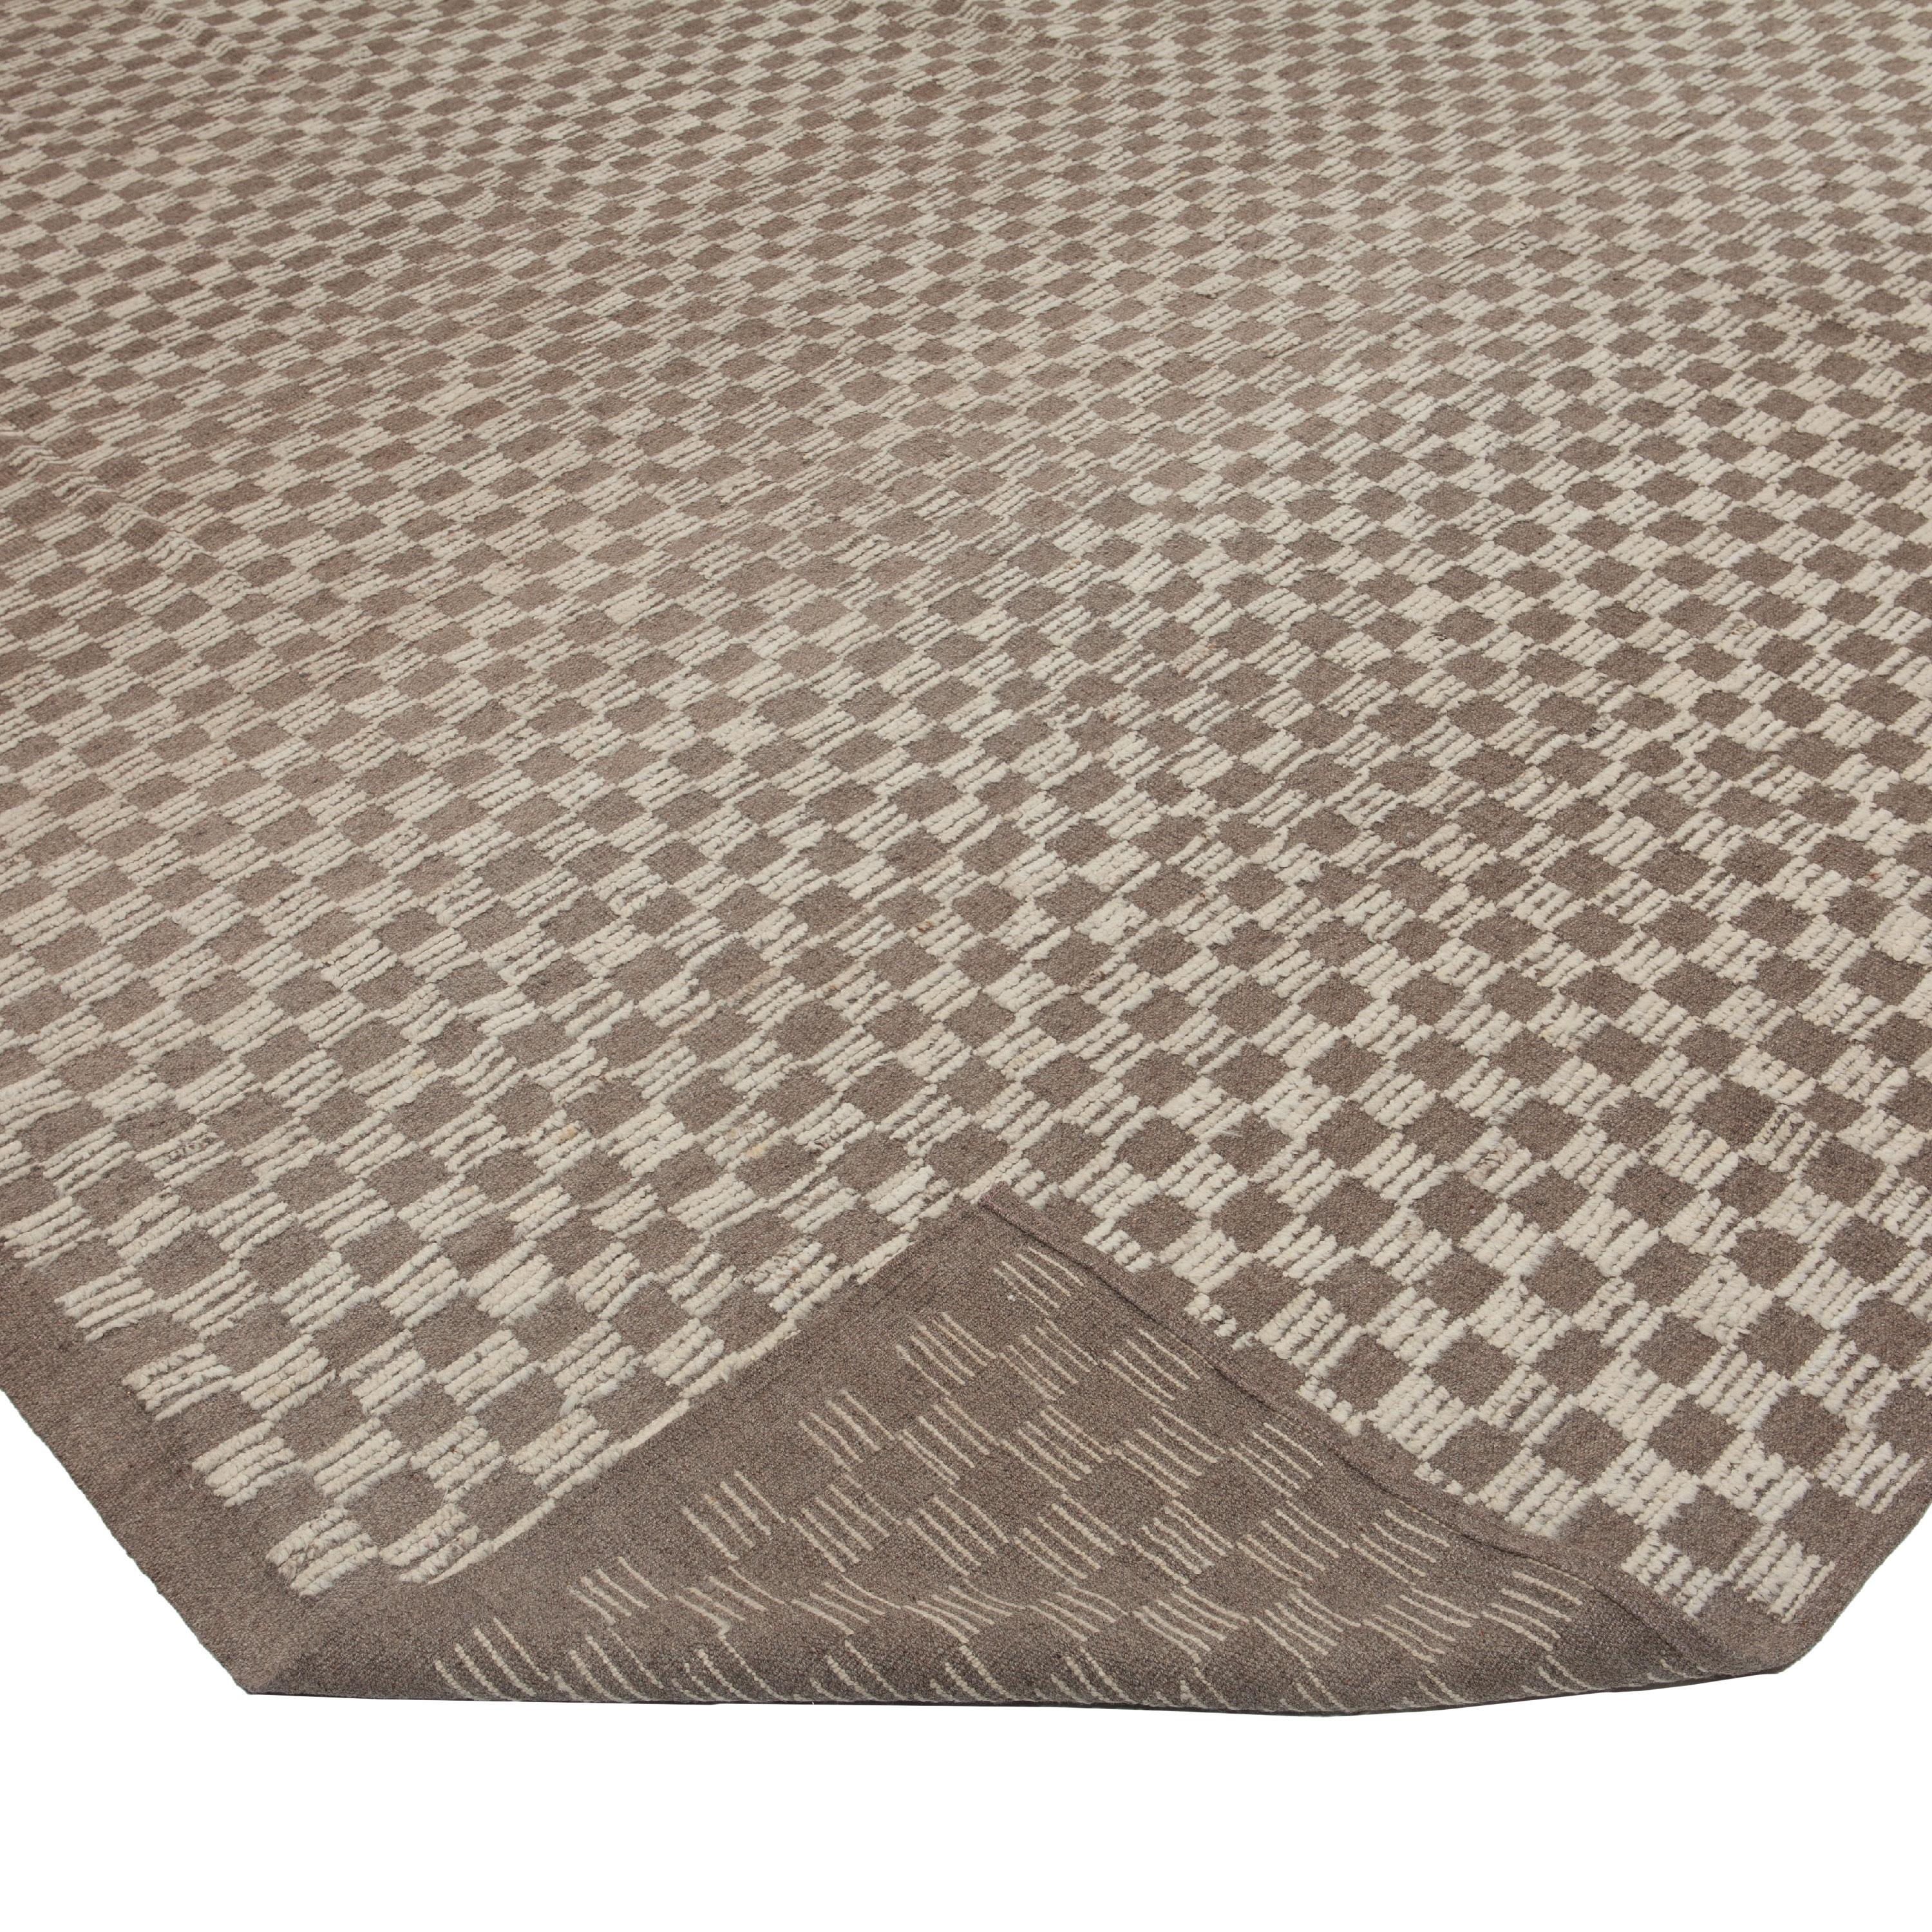 Afghan abc carpet Zameen Brown and White Grid Modern Wool Rug - 13'8